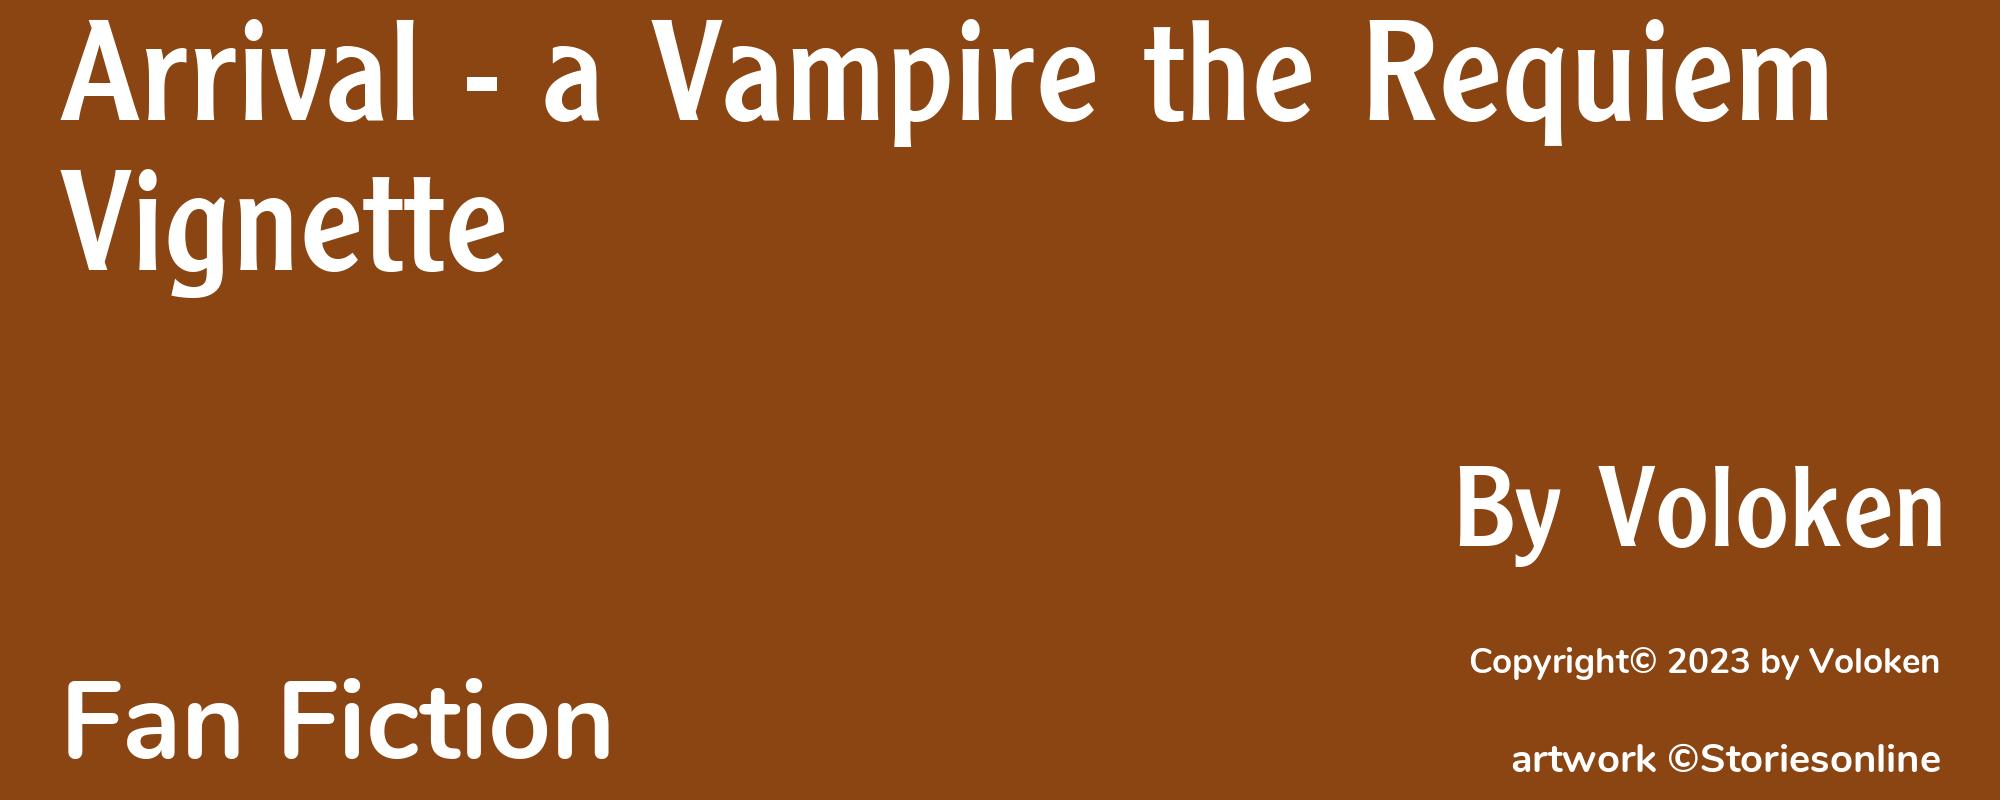 Arrival - a Vampire the Requiem Vignette - Cover